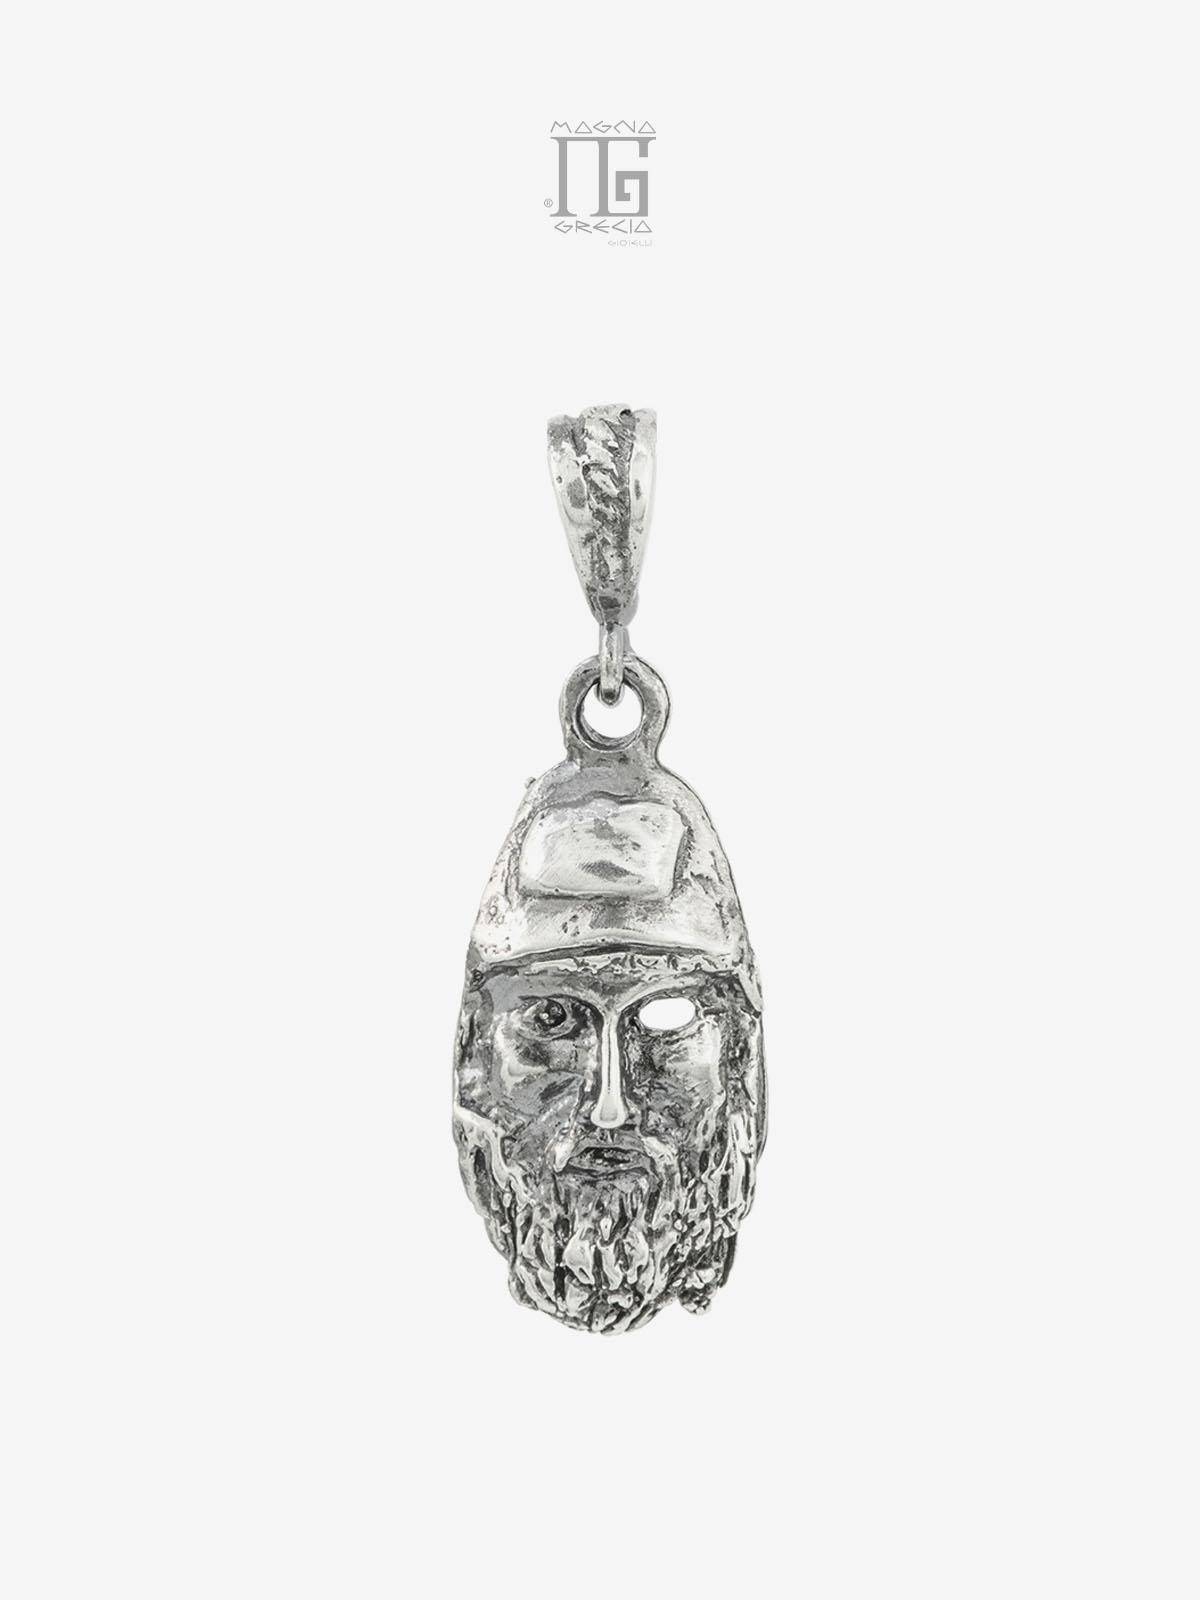 Silver pendant with Riace Bronze face B Cod. MGK 3837 V